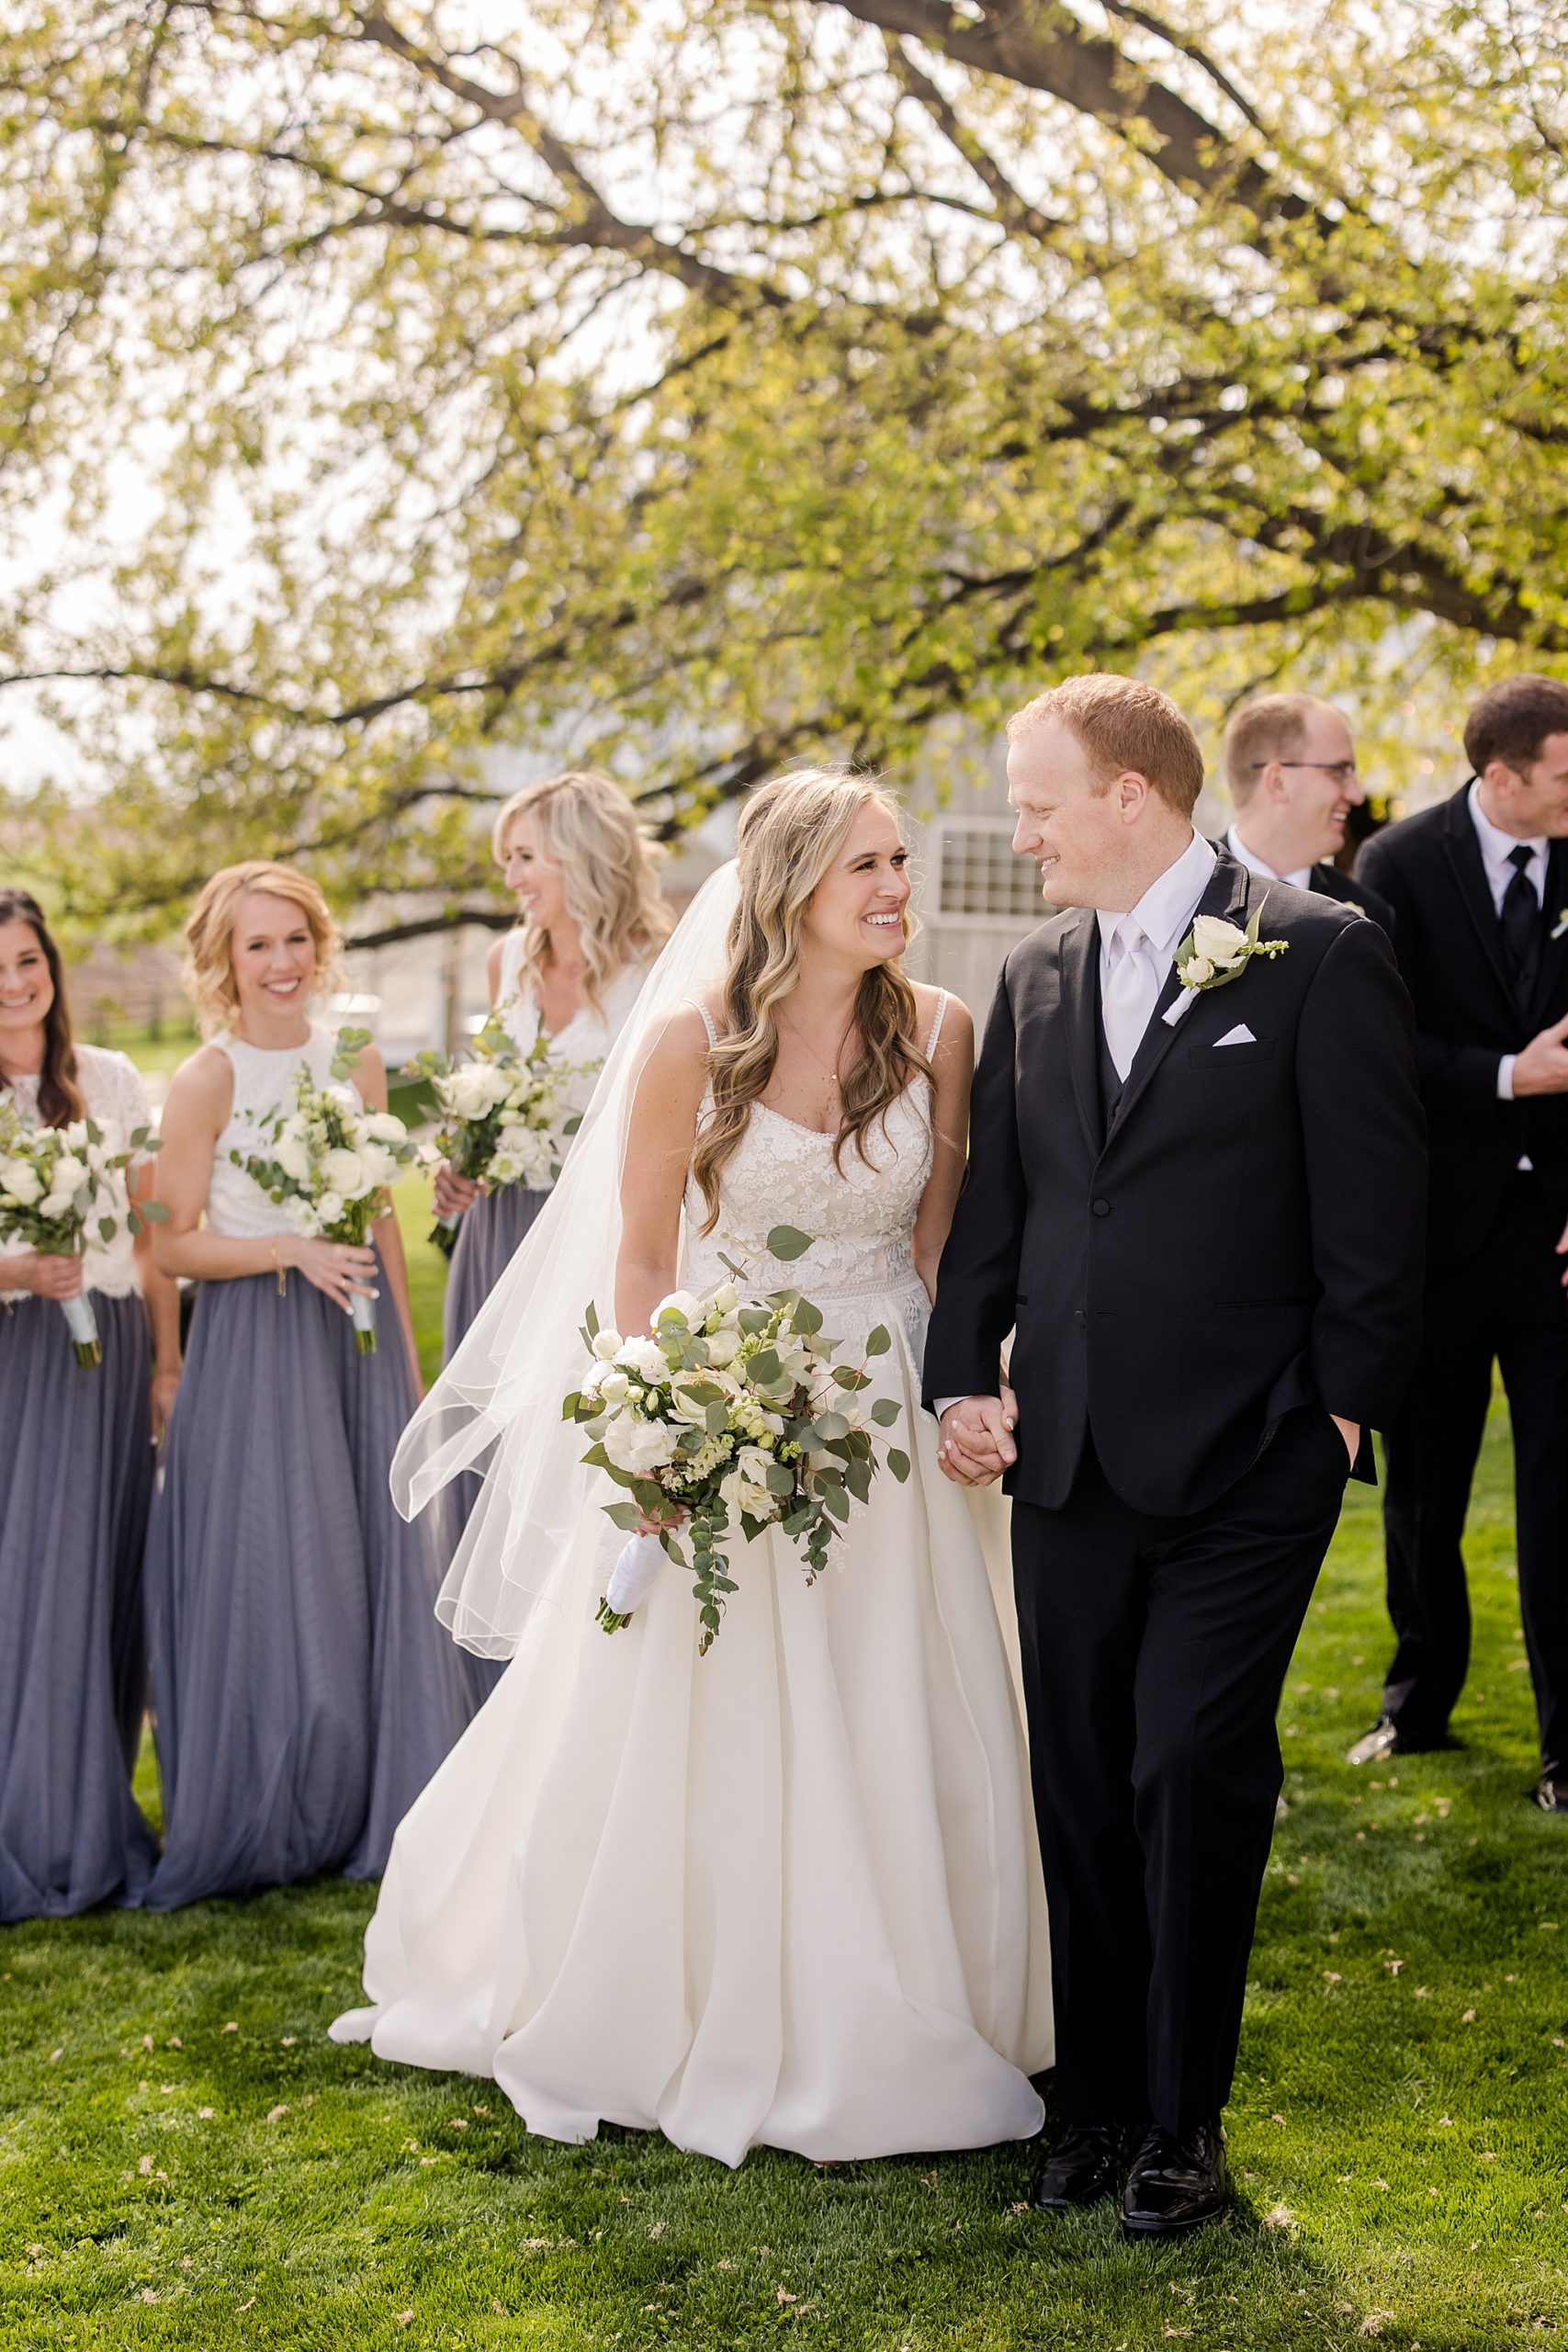 Legacy Hill Farm Spring Wedding, Minneapolis wedding photographers